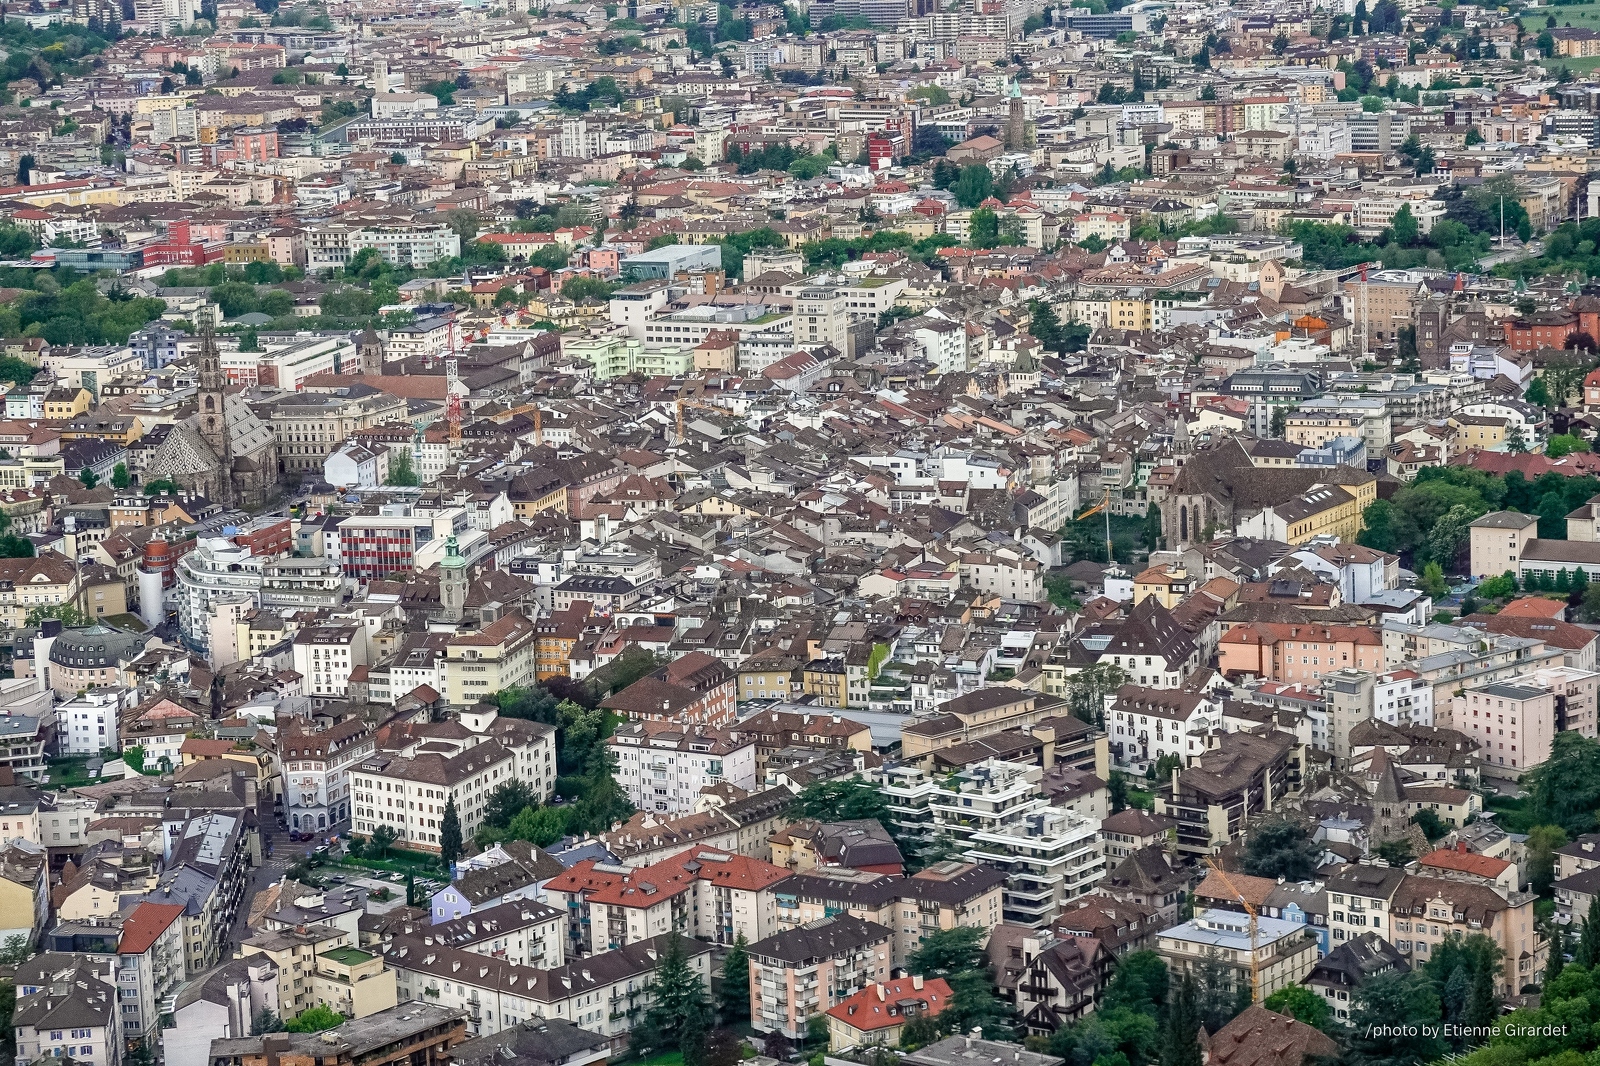 201904_26_RXX2896-houses-city-bozen-from-above-by-E-Girardet.jpg